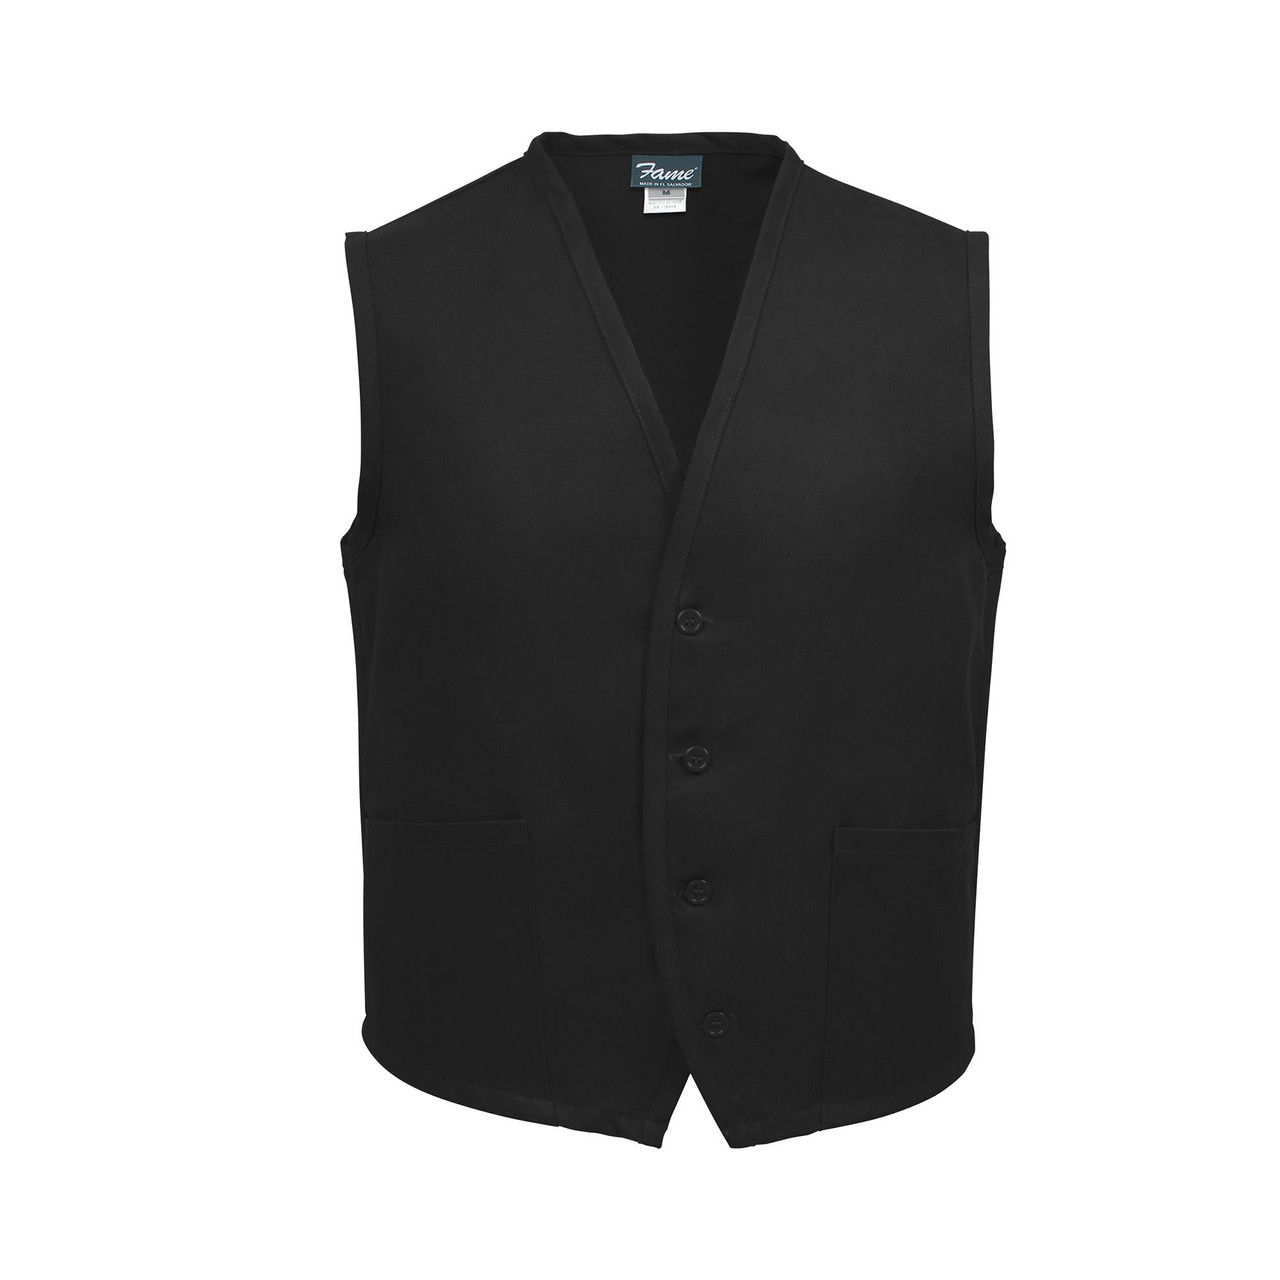 What color is the unisex vest in the Professional Uniform range?